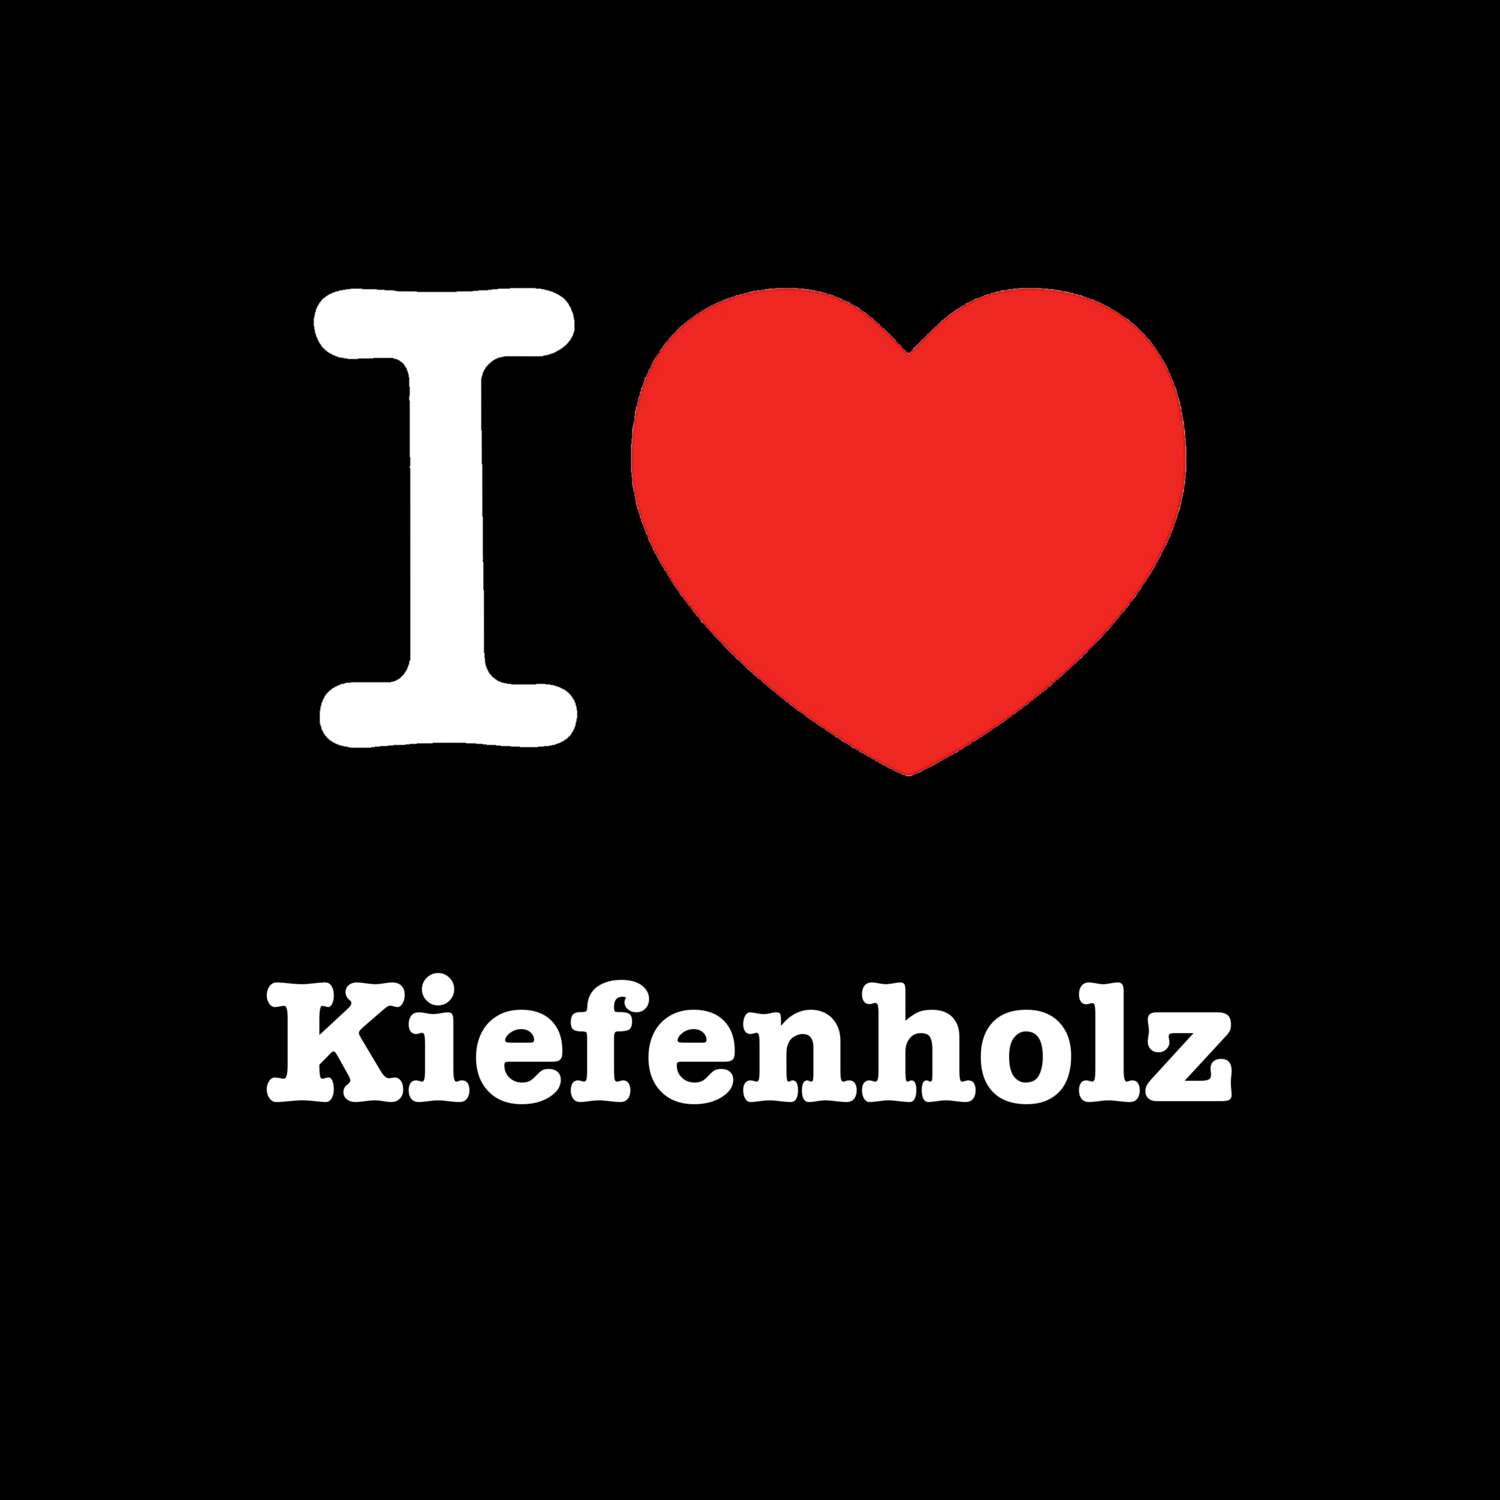 Kiefenholz T-Shirt »I love«